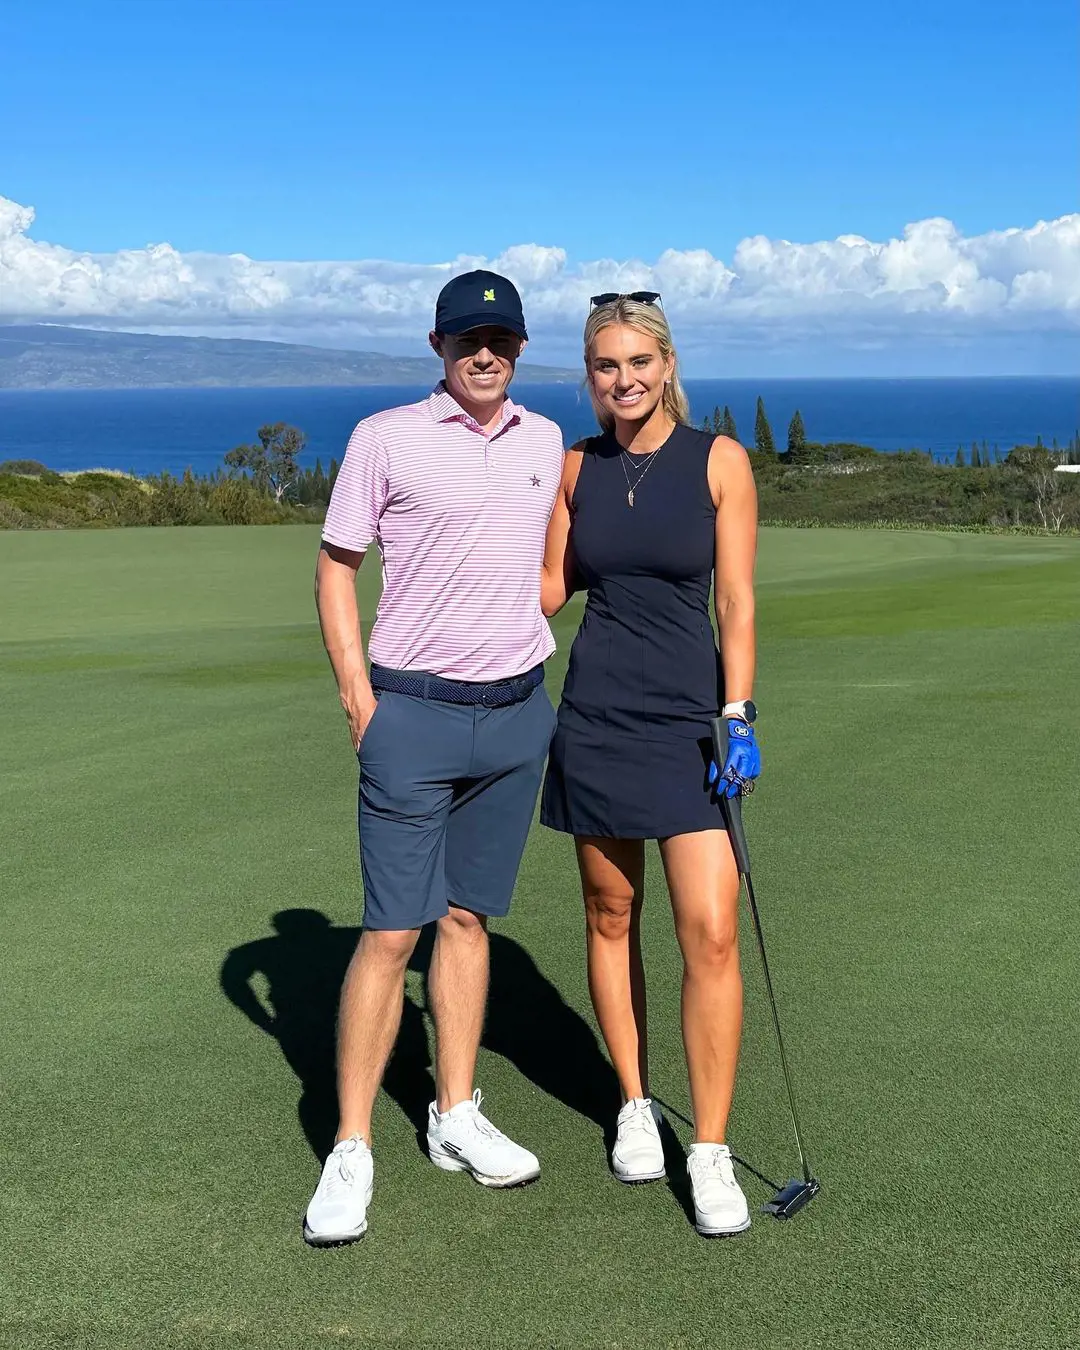 Matt and Katherine started their 2023 at Kapalua, Hawaii playing golf together. 